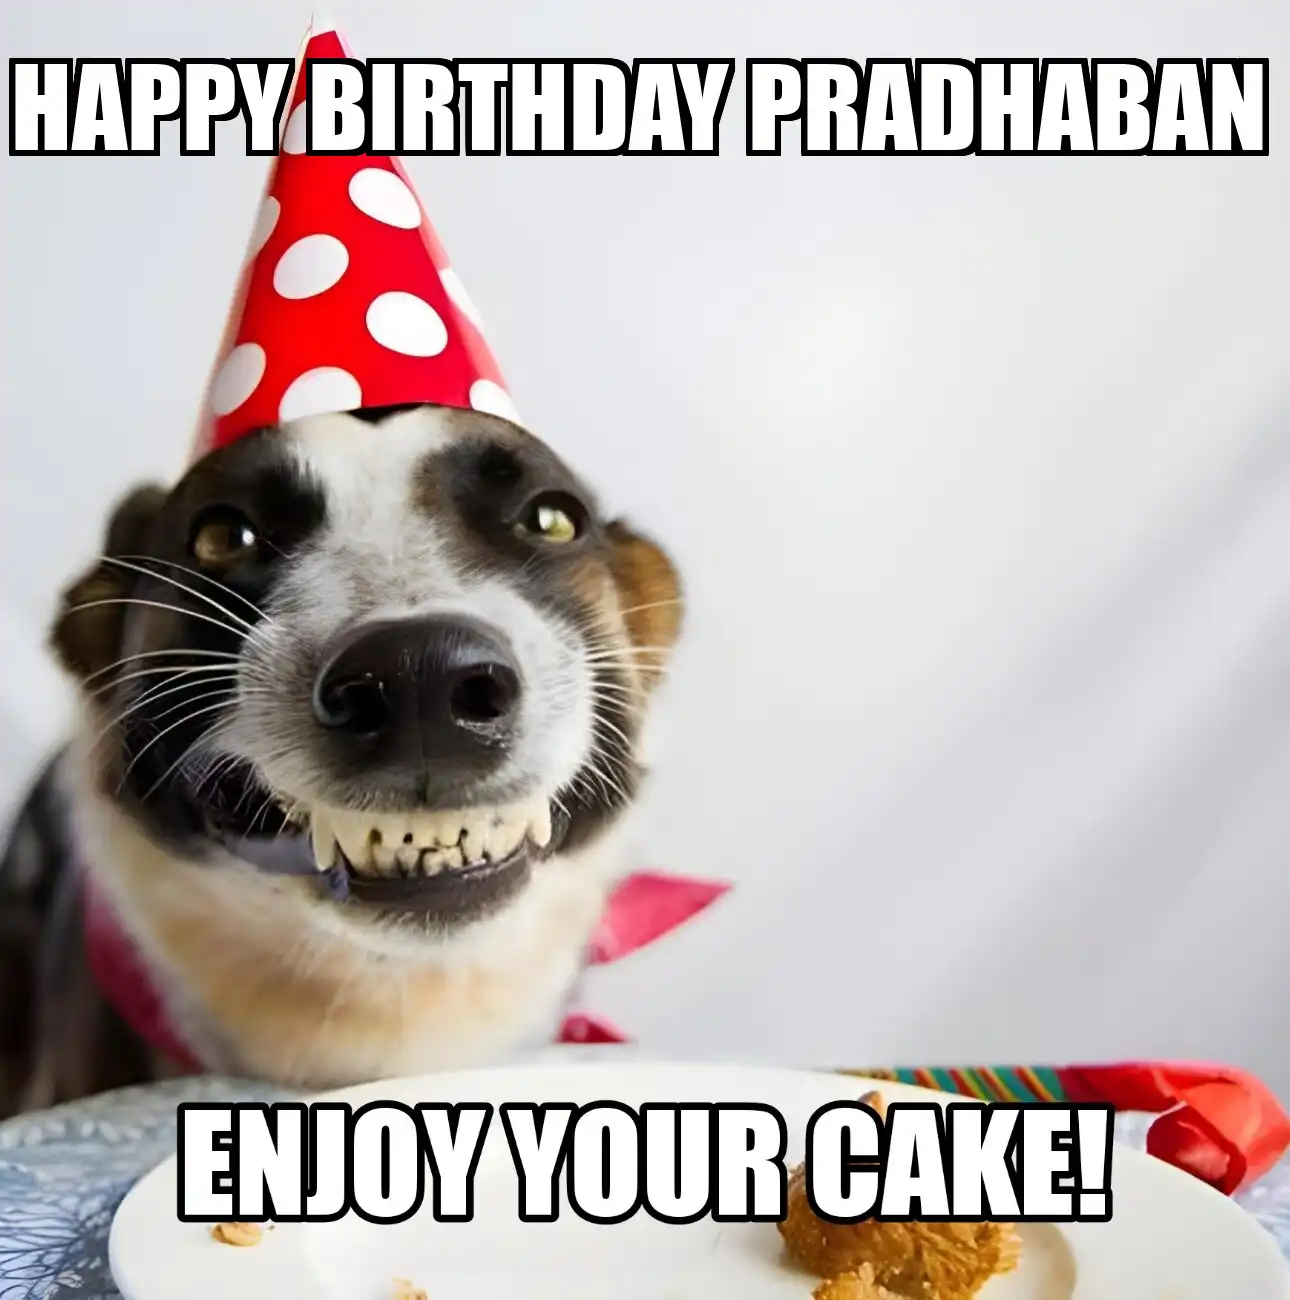 Happy Birthday Pradhaban Enjoy Your Cake Dog Meme